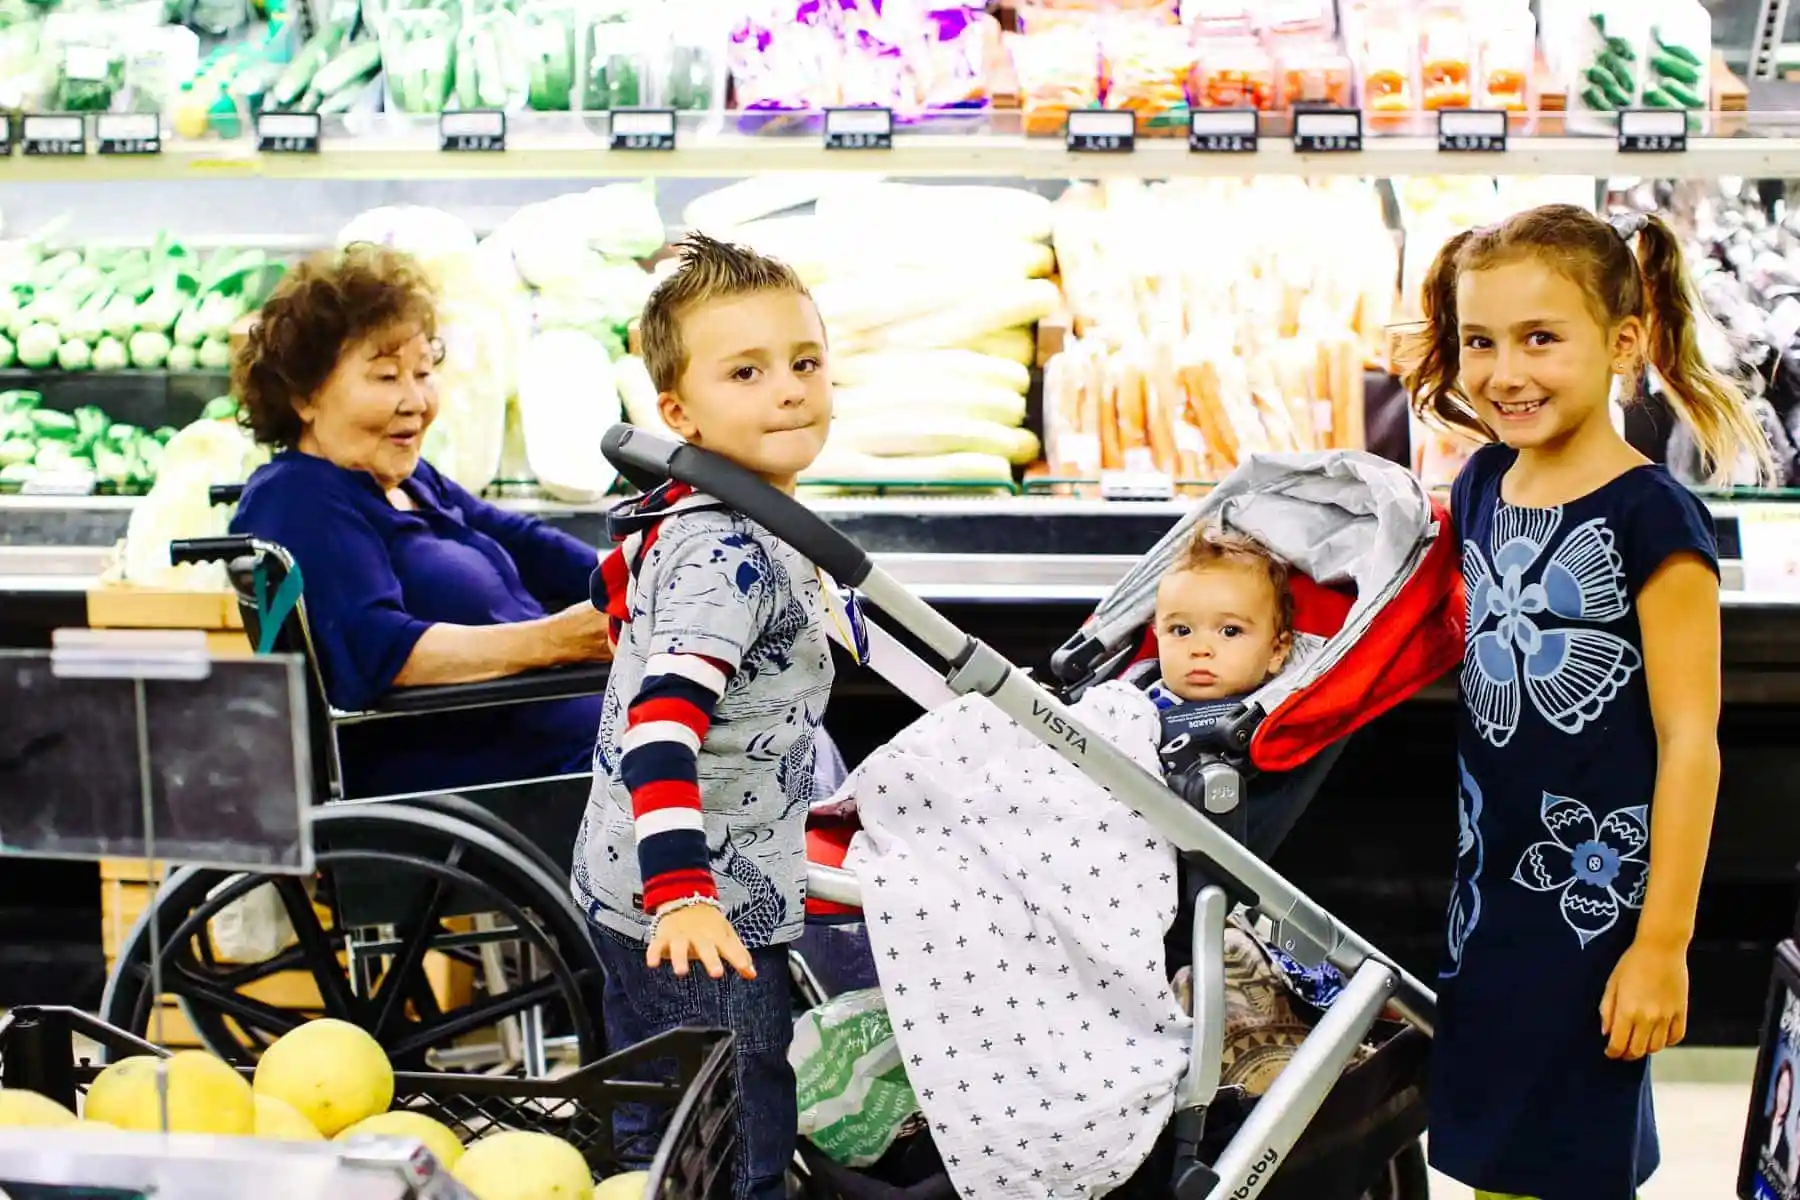 grandma with her grandchildren at the supermarket